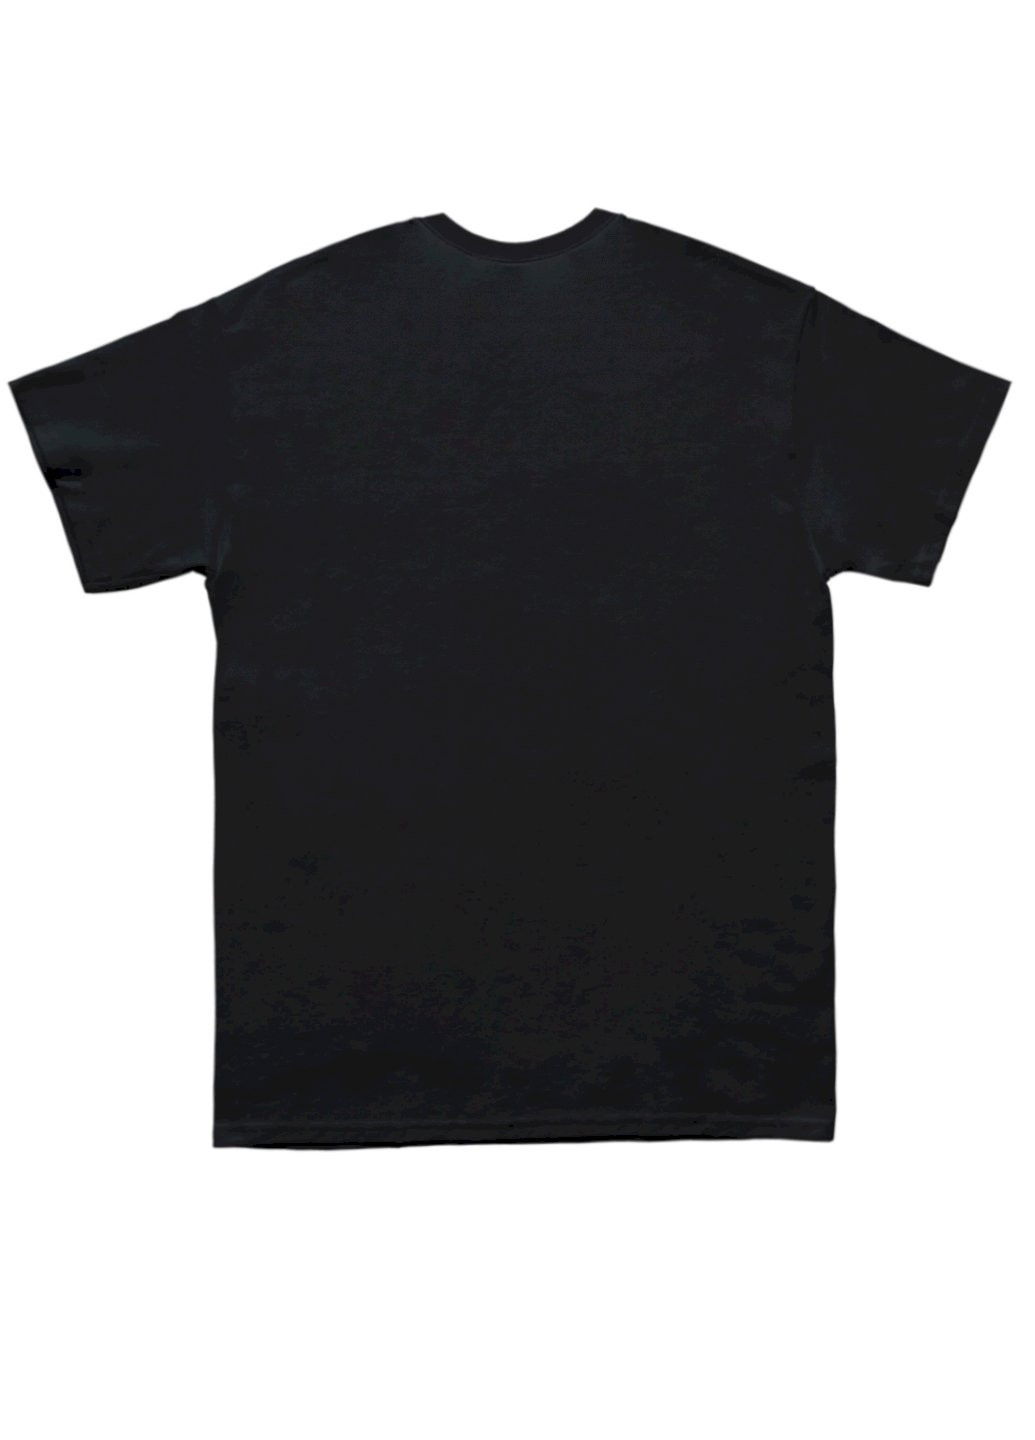 Черная футболка мужская черная "1.35 million km from earth" Trace of Space